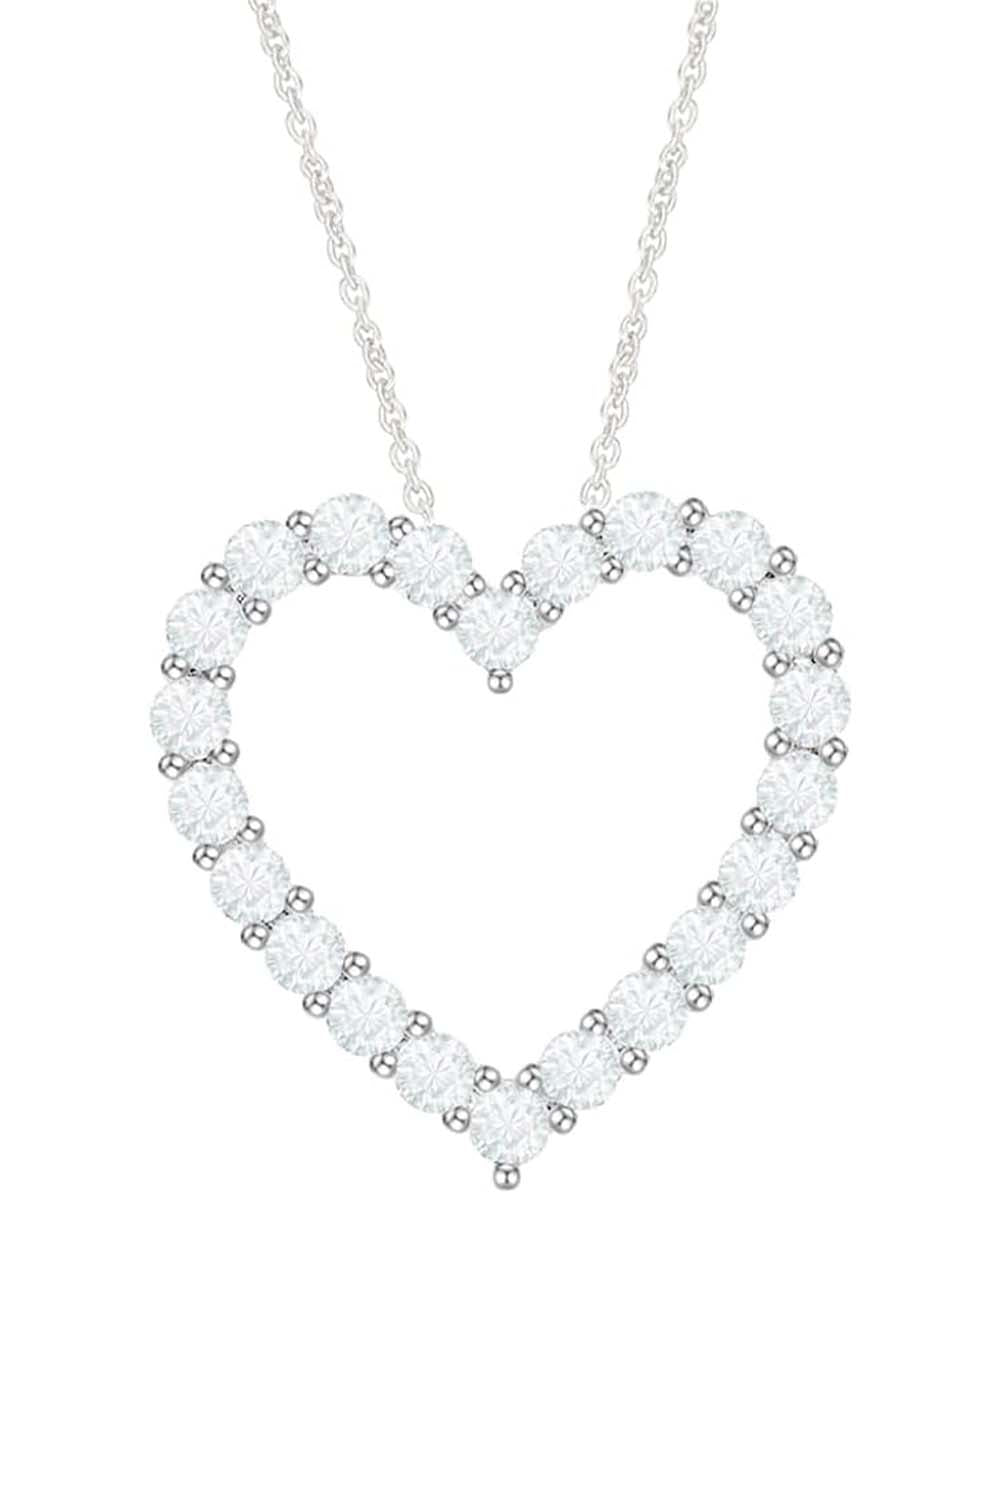 White Gold Color Moissanite Heart Necklace, Heart Pendant Necklace 